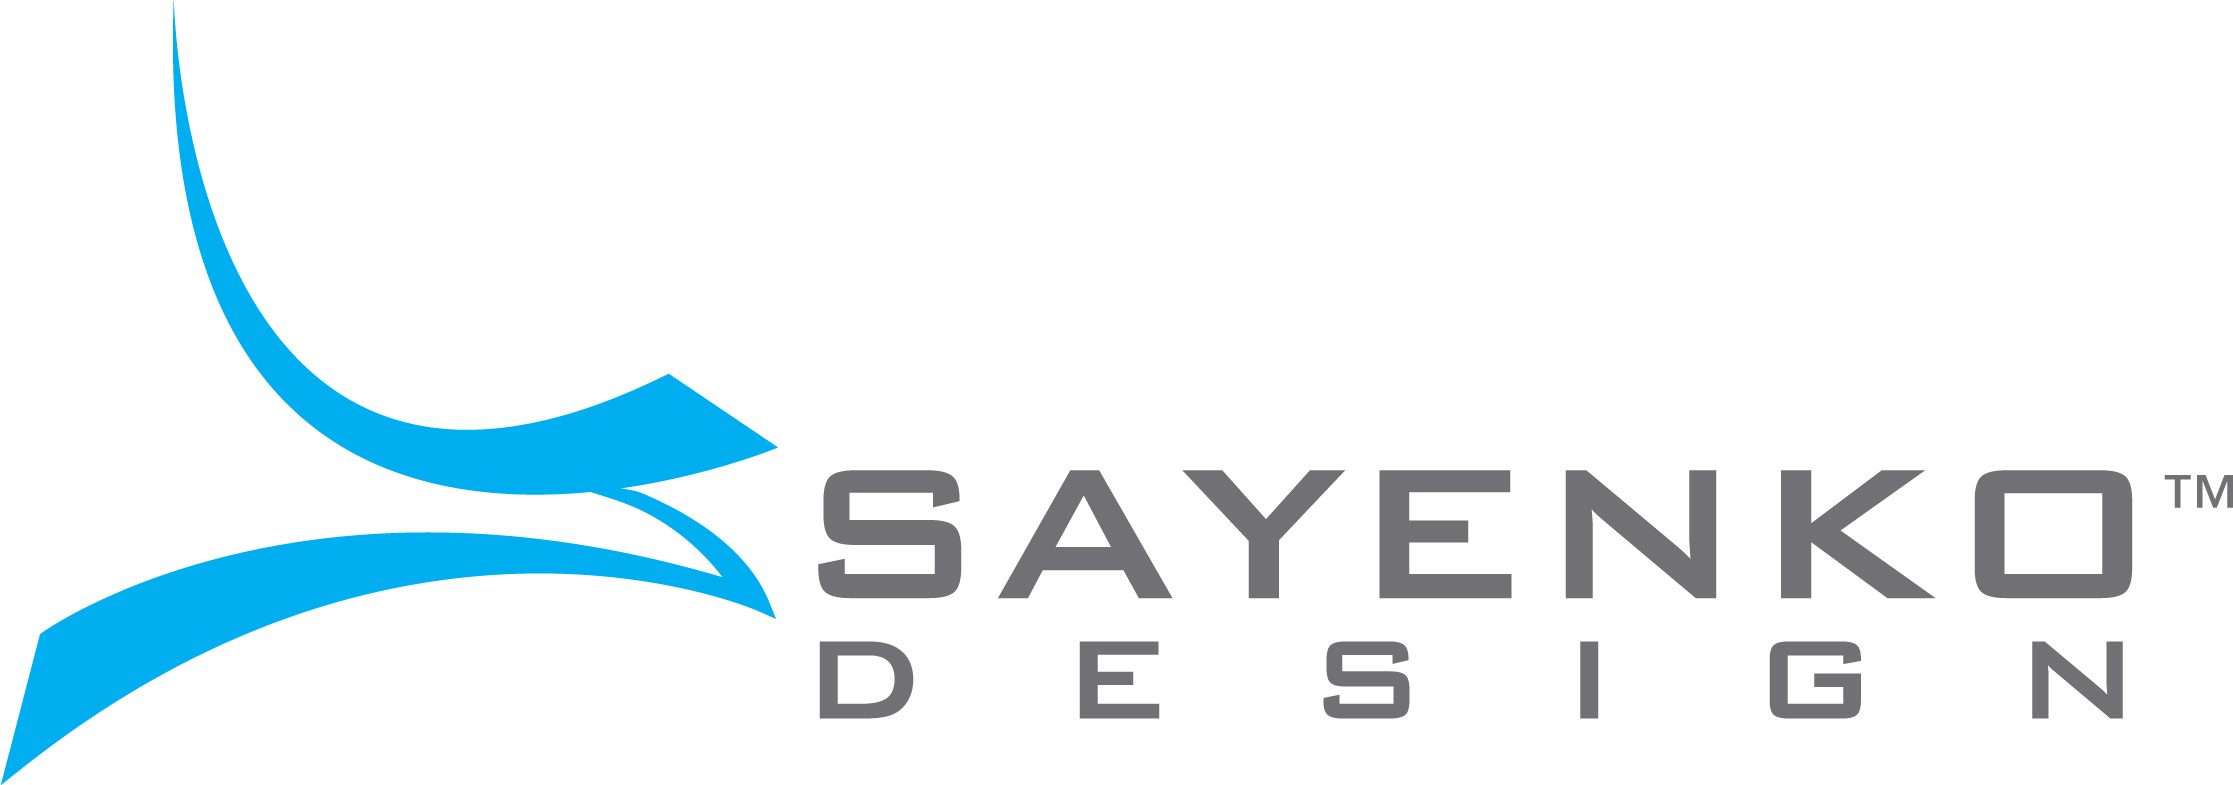 Top Seattle Web Design Business Logo: Sayenko Design